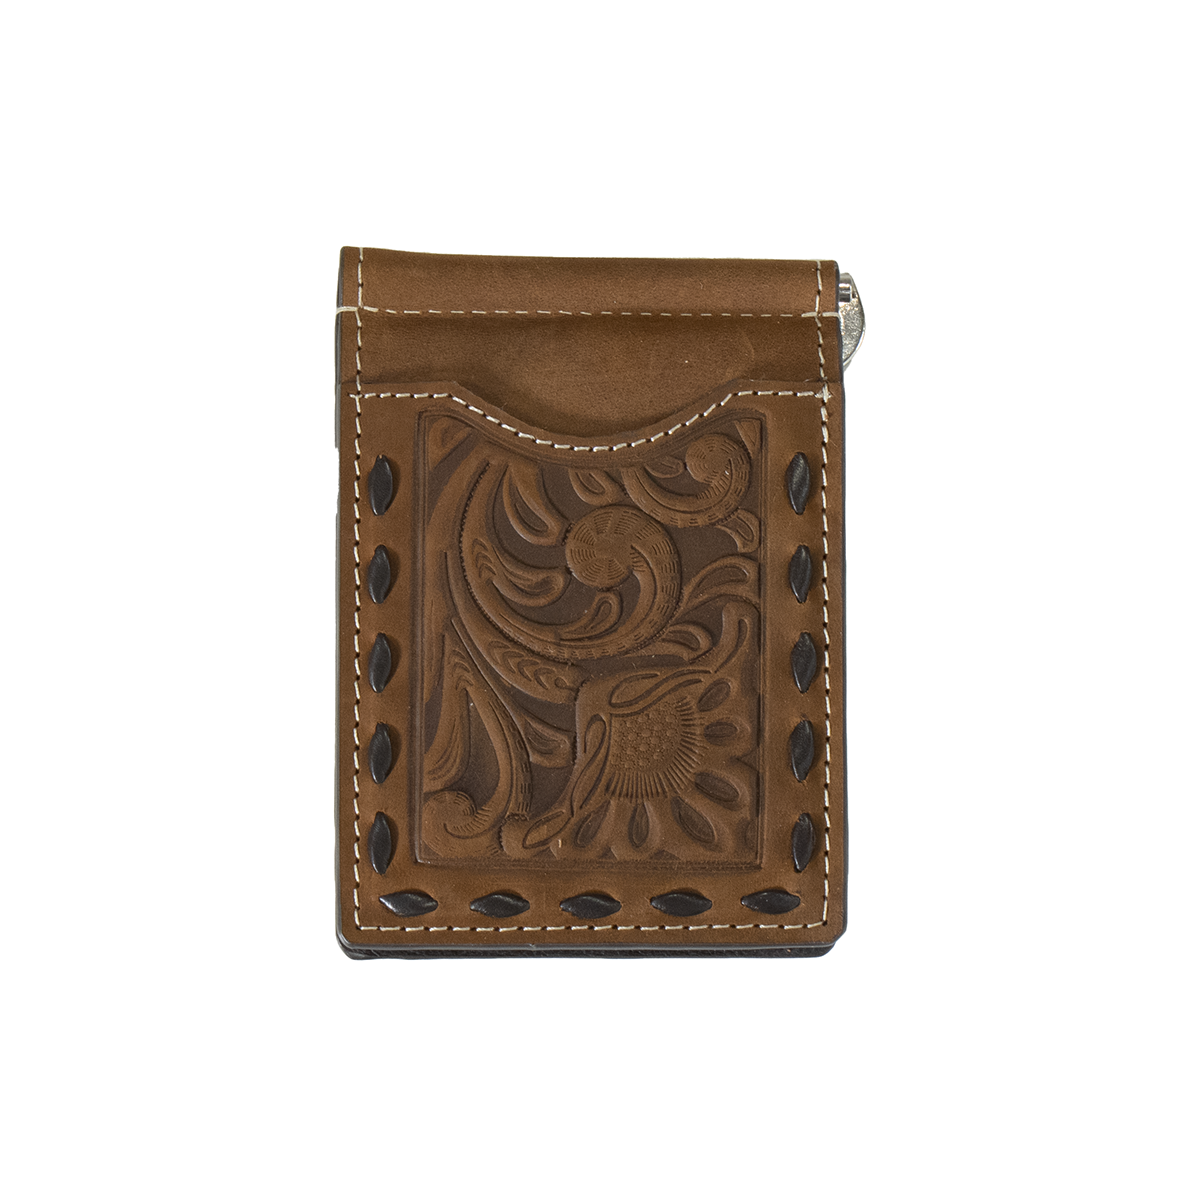 Nocona Money Clip Floral Embossed Wallet - Chocolate/Brown